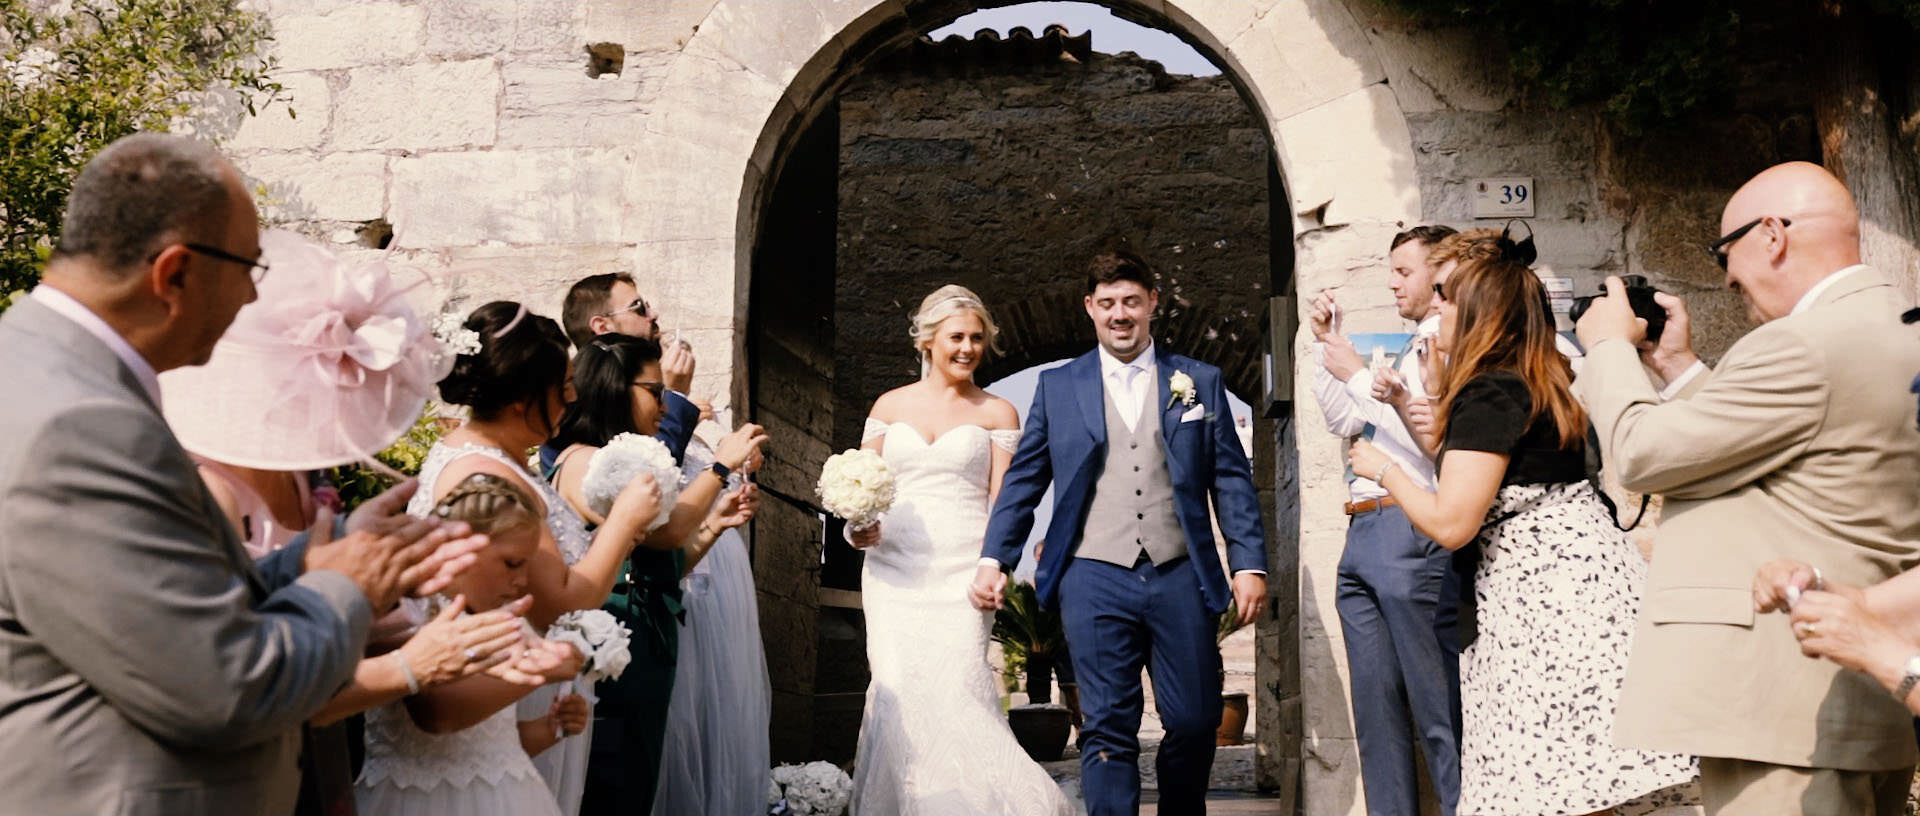 Laura & Reuben Desitnation Wedding in Malcesine Lake Garda 22.jpg